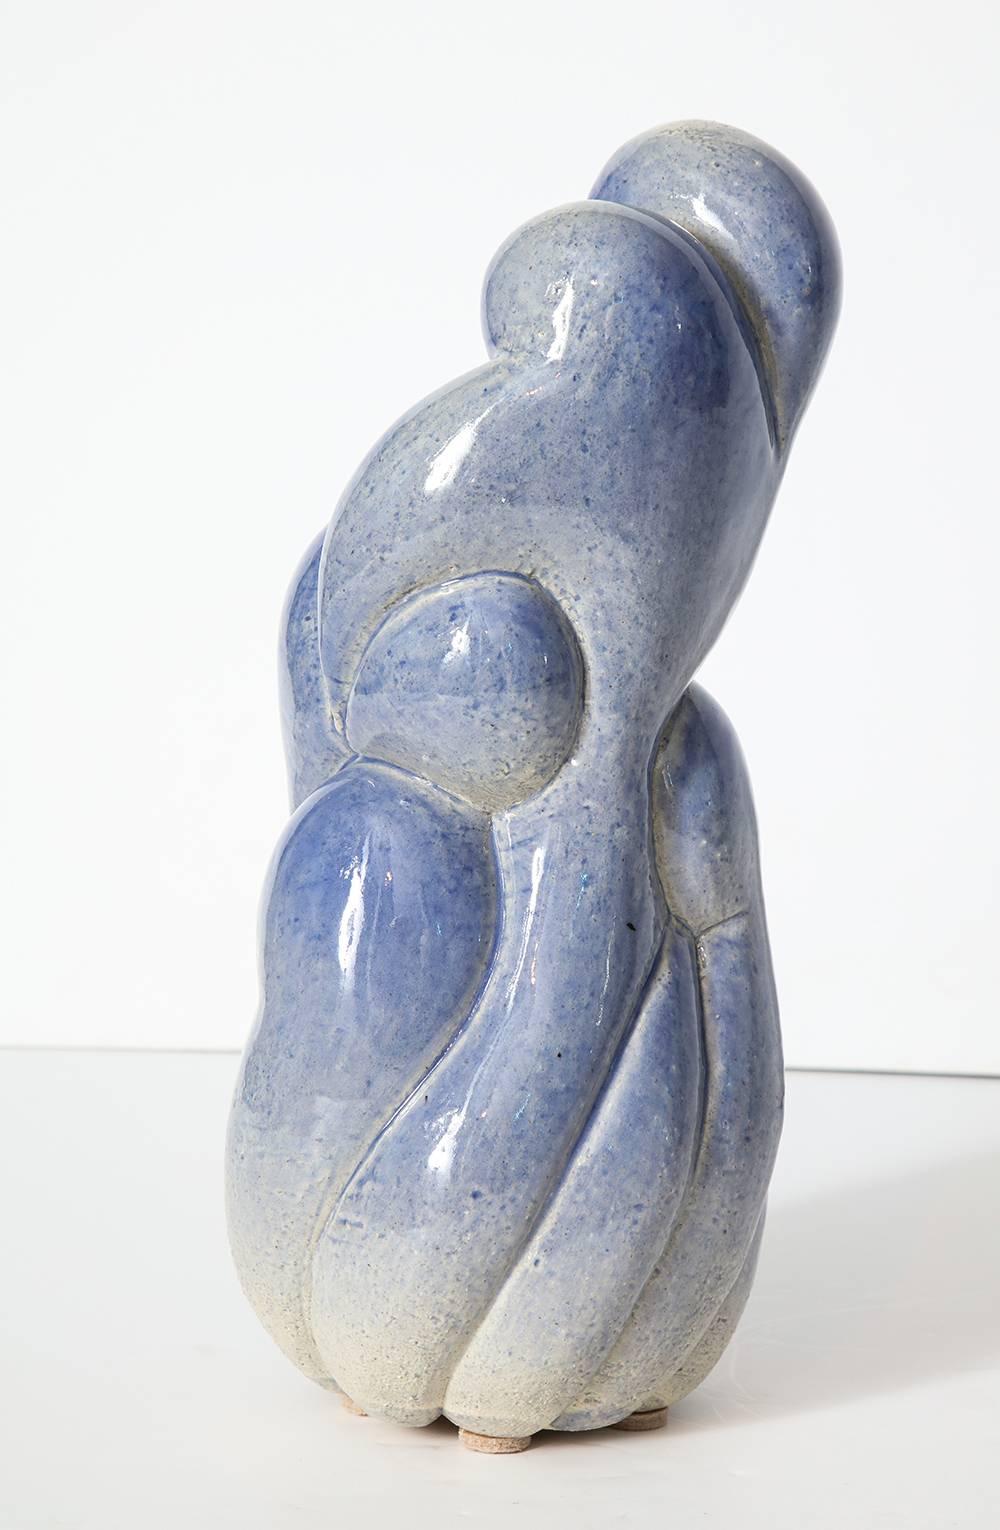 Studio-built, stoneware vase form with pale blue glaze. Artist signed and dated on underside.